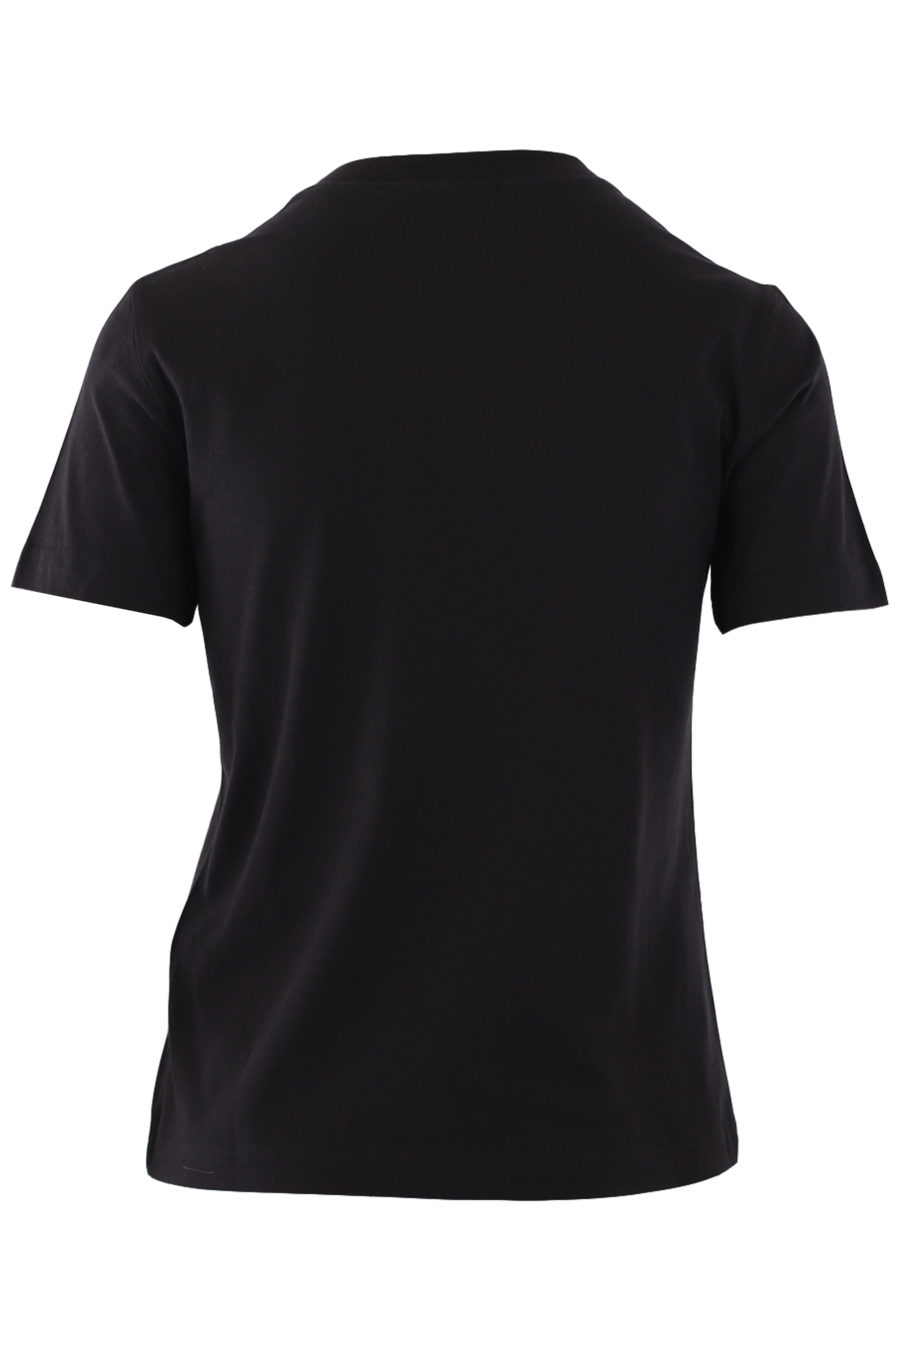 Camiseta negra con logo multicolor centro - IMG 0829